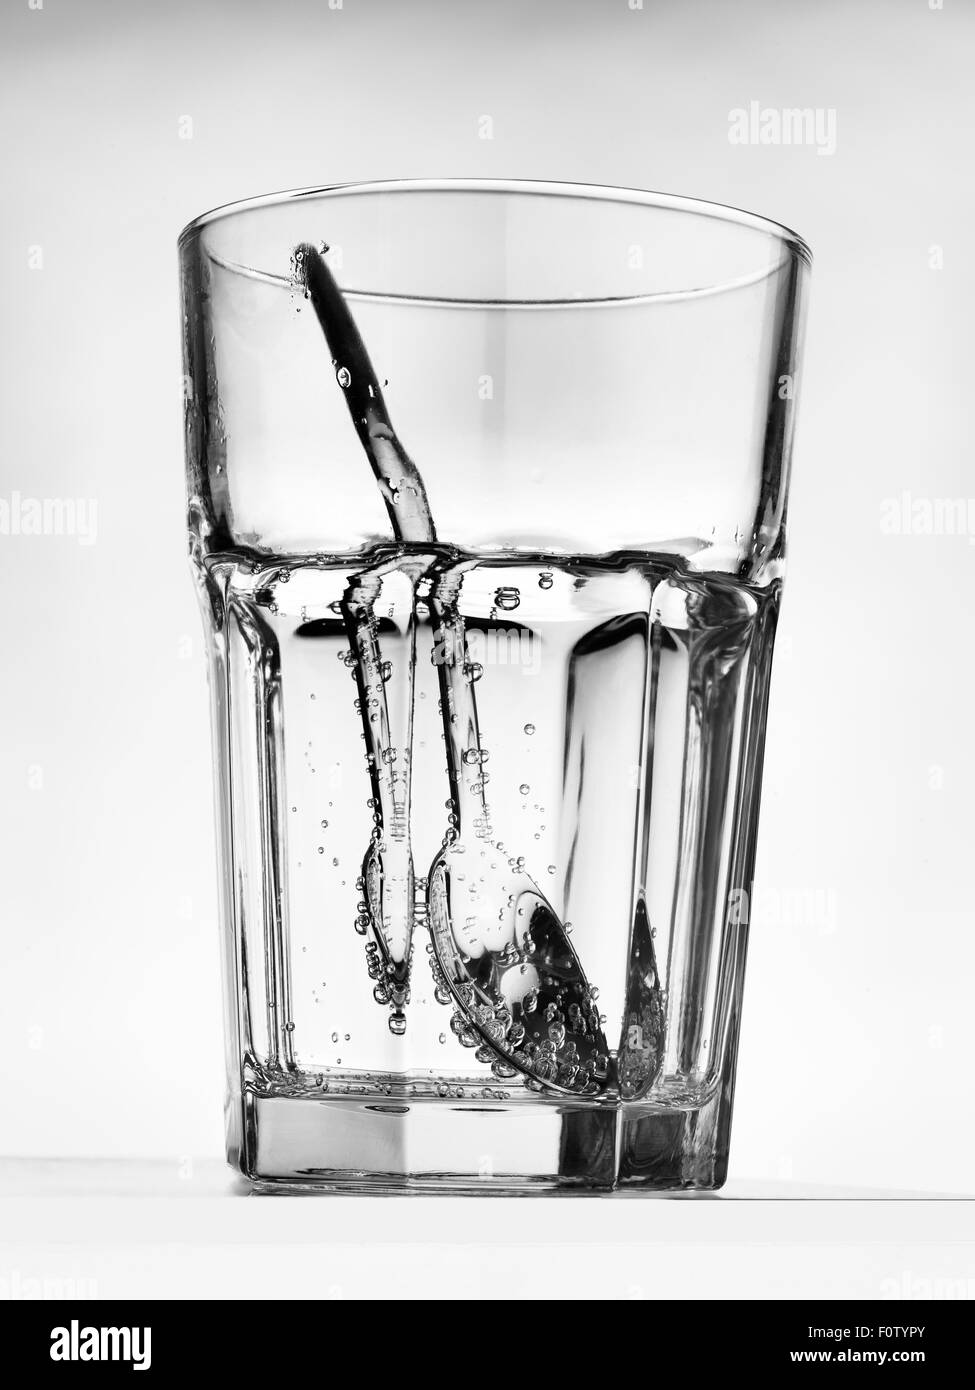 Still life of silver teaspoon inside glass of water Stock Photo